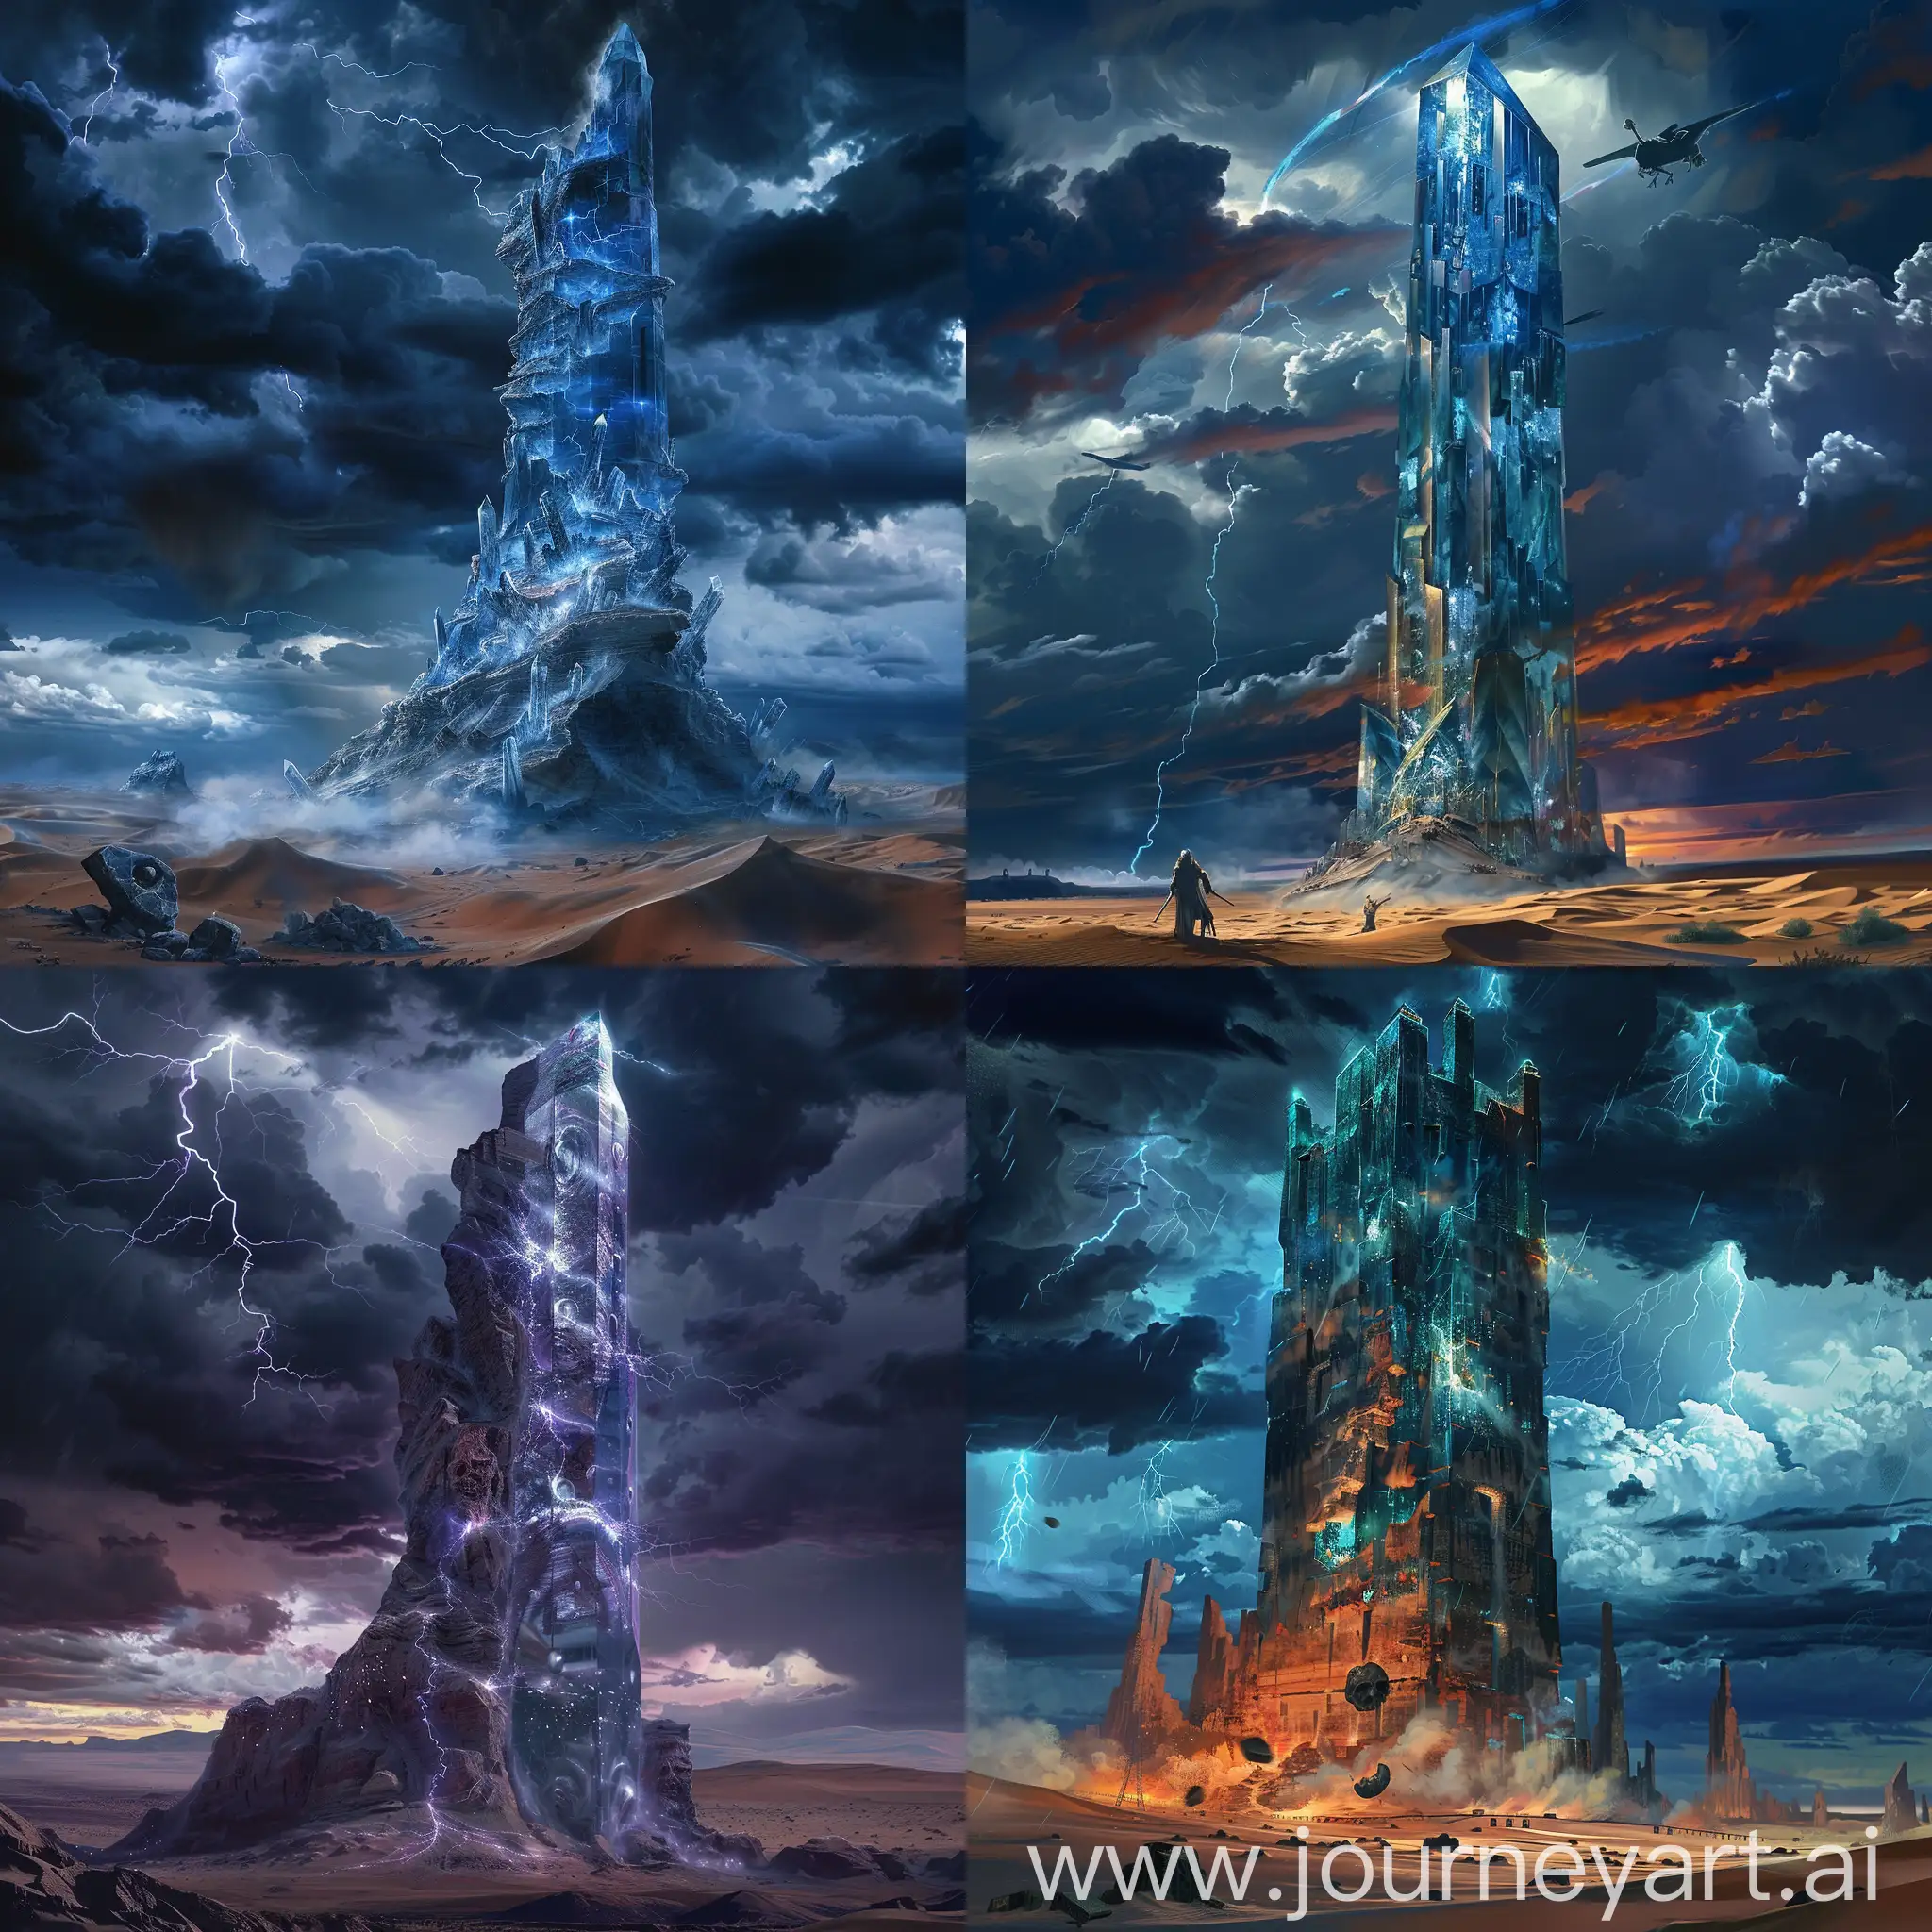 Menacing-Zombie-Villains-Crystal-Tower-Amidst-Desert-Storm-Fantasy-Art